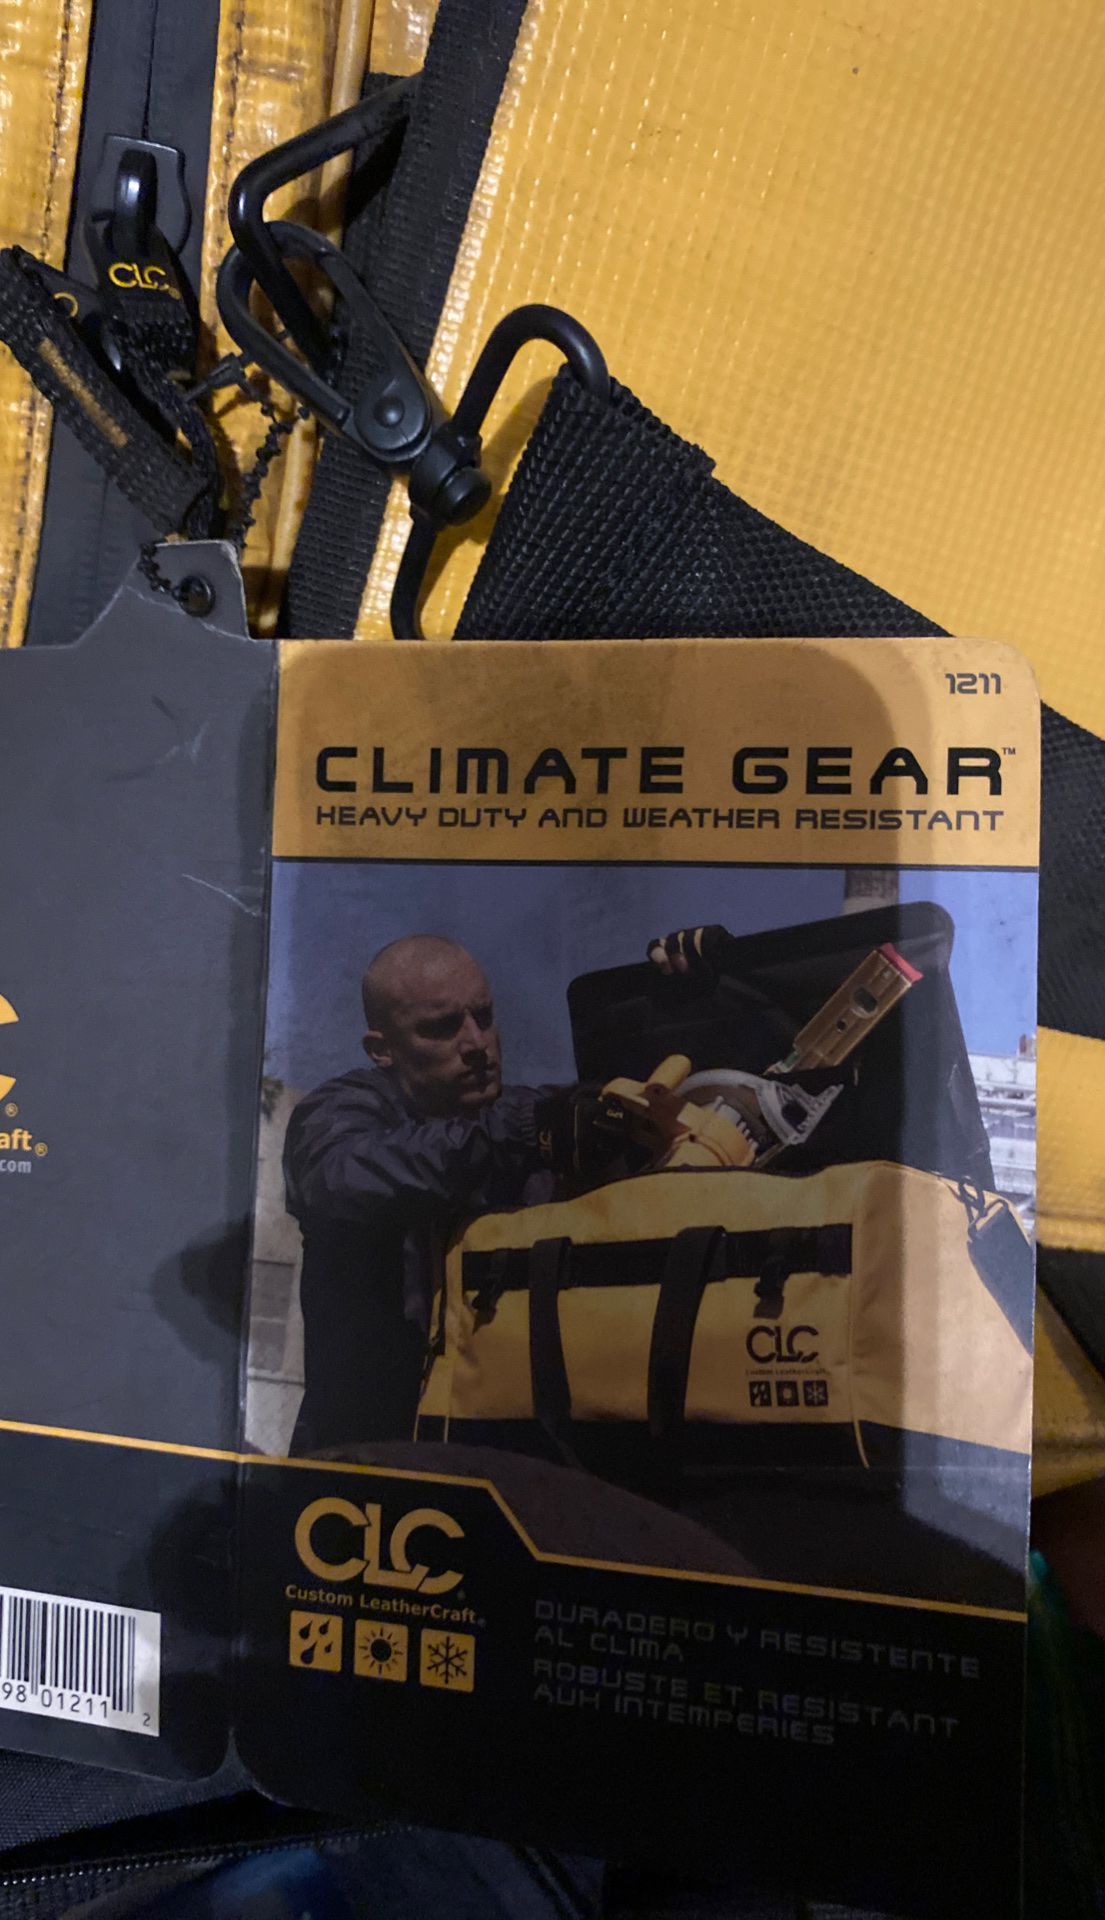 CLC 25” Climate Gear Large Duffle Bag